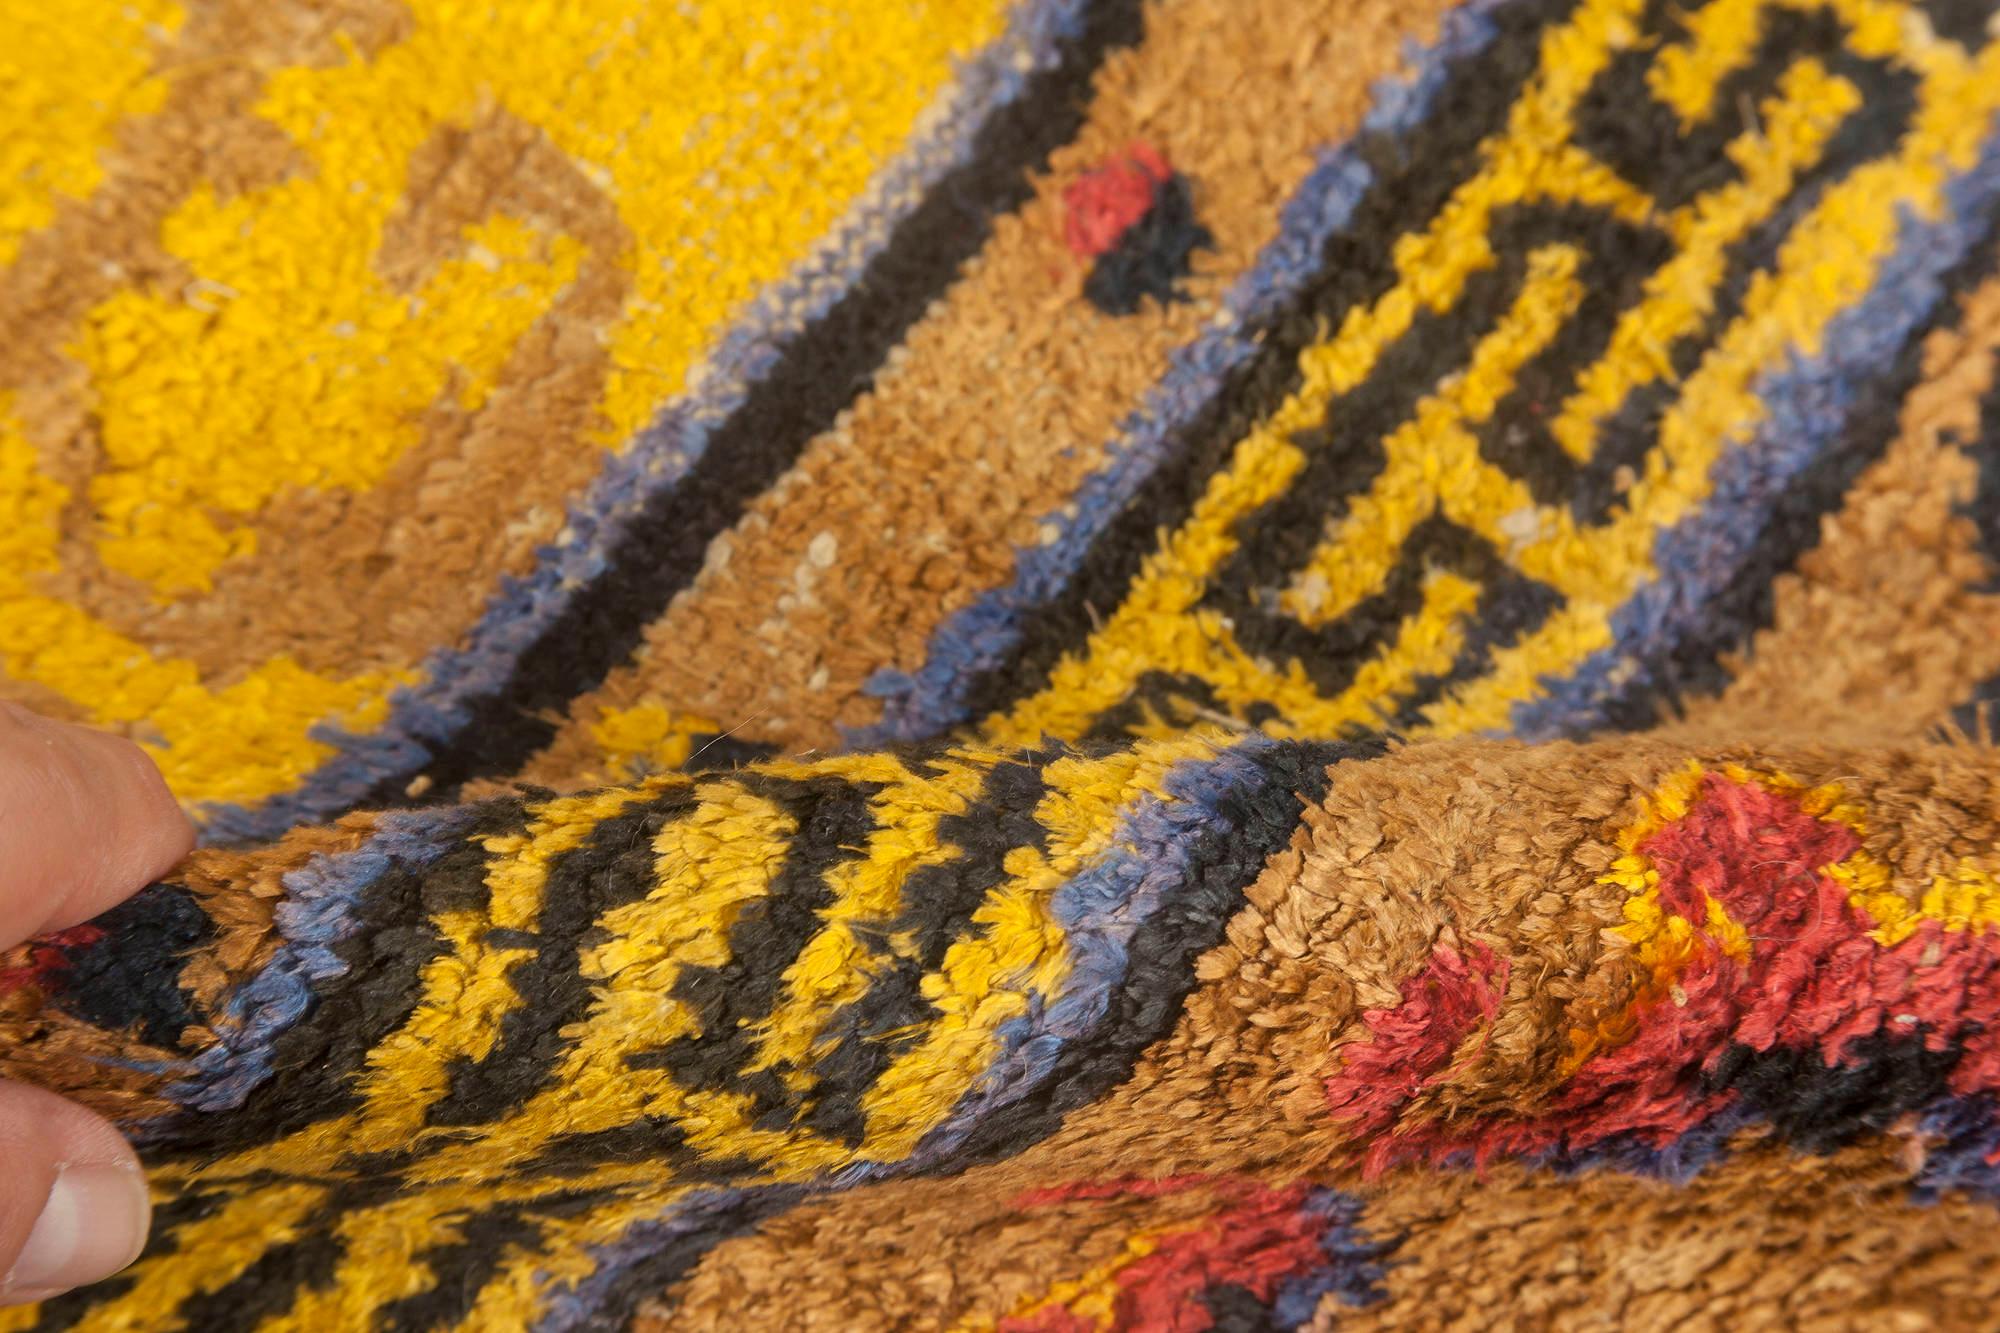 Early 20th century Chinese yellow handmade silk rug by Doris Leslie Blau
Size: 6'2